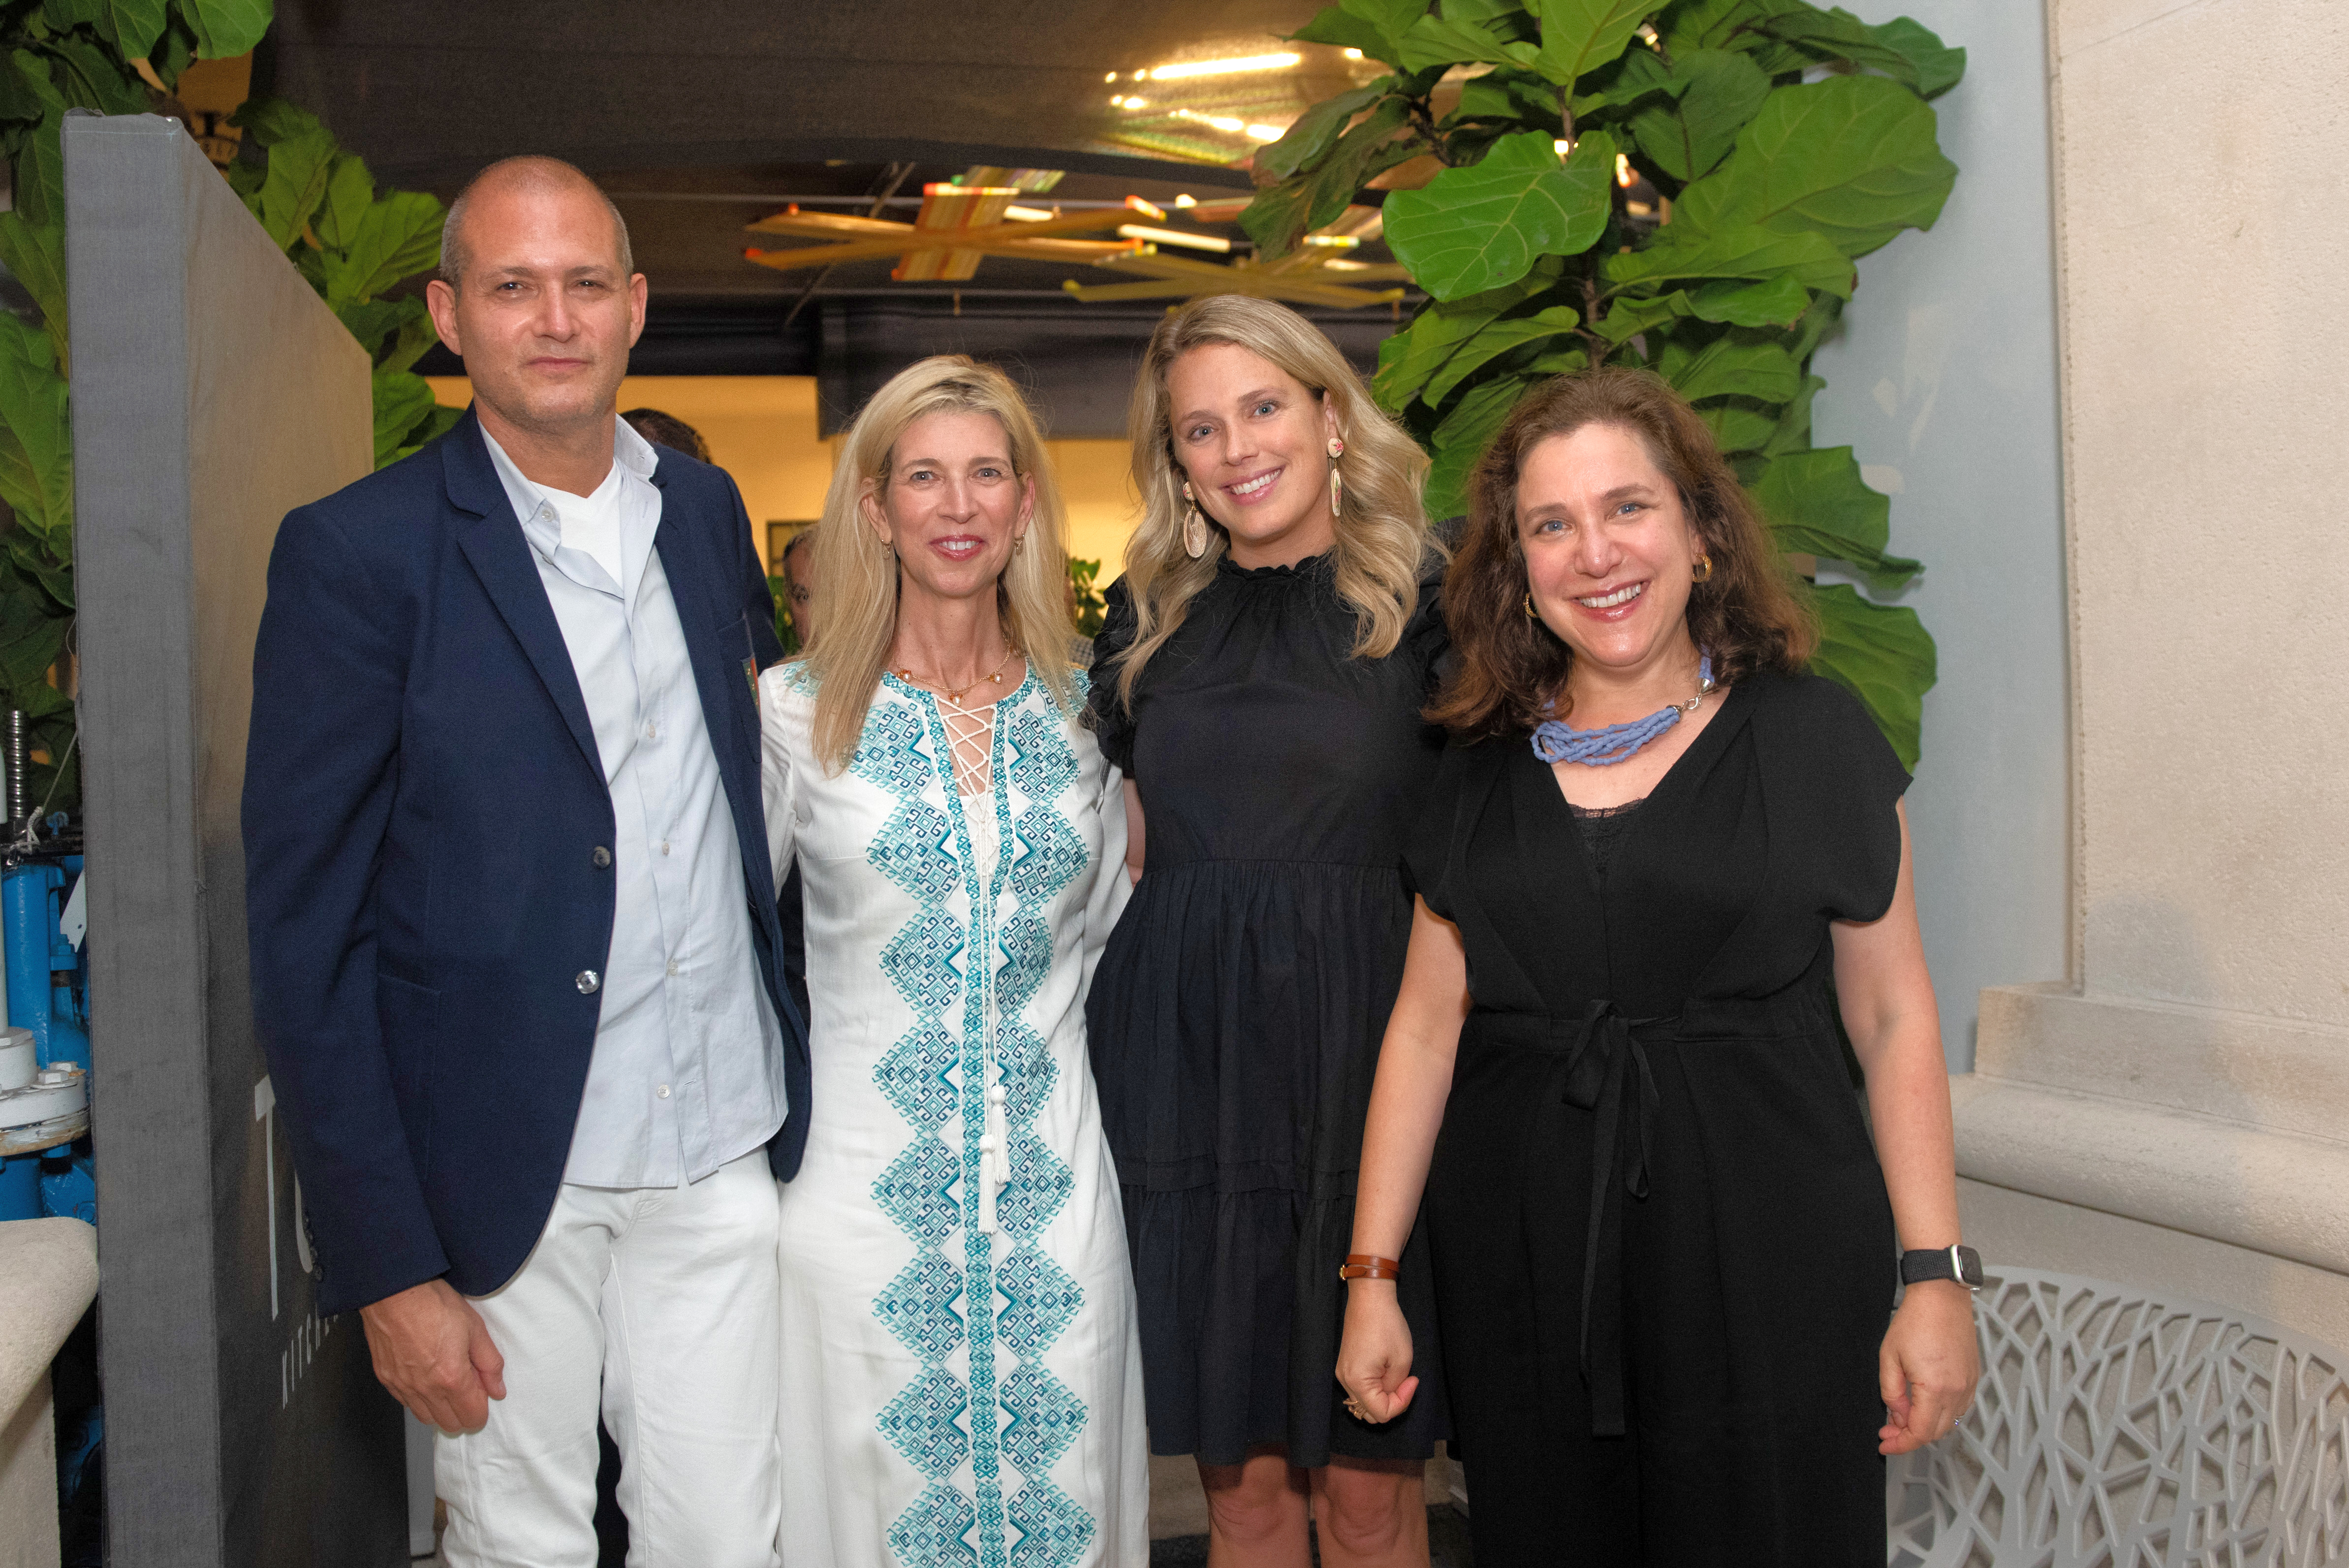 Janus et Cie and Elle Decor Host Exclusive Dinner Event to Kick Off Art Basel